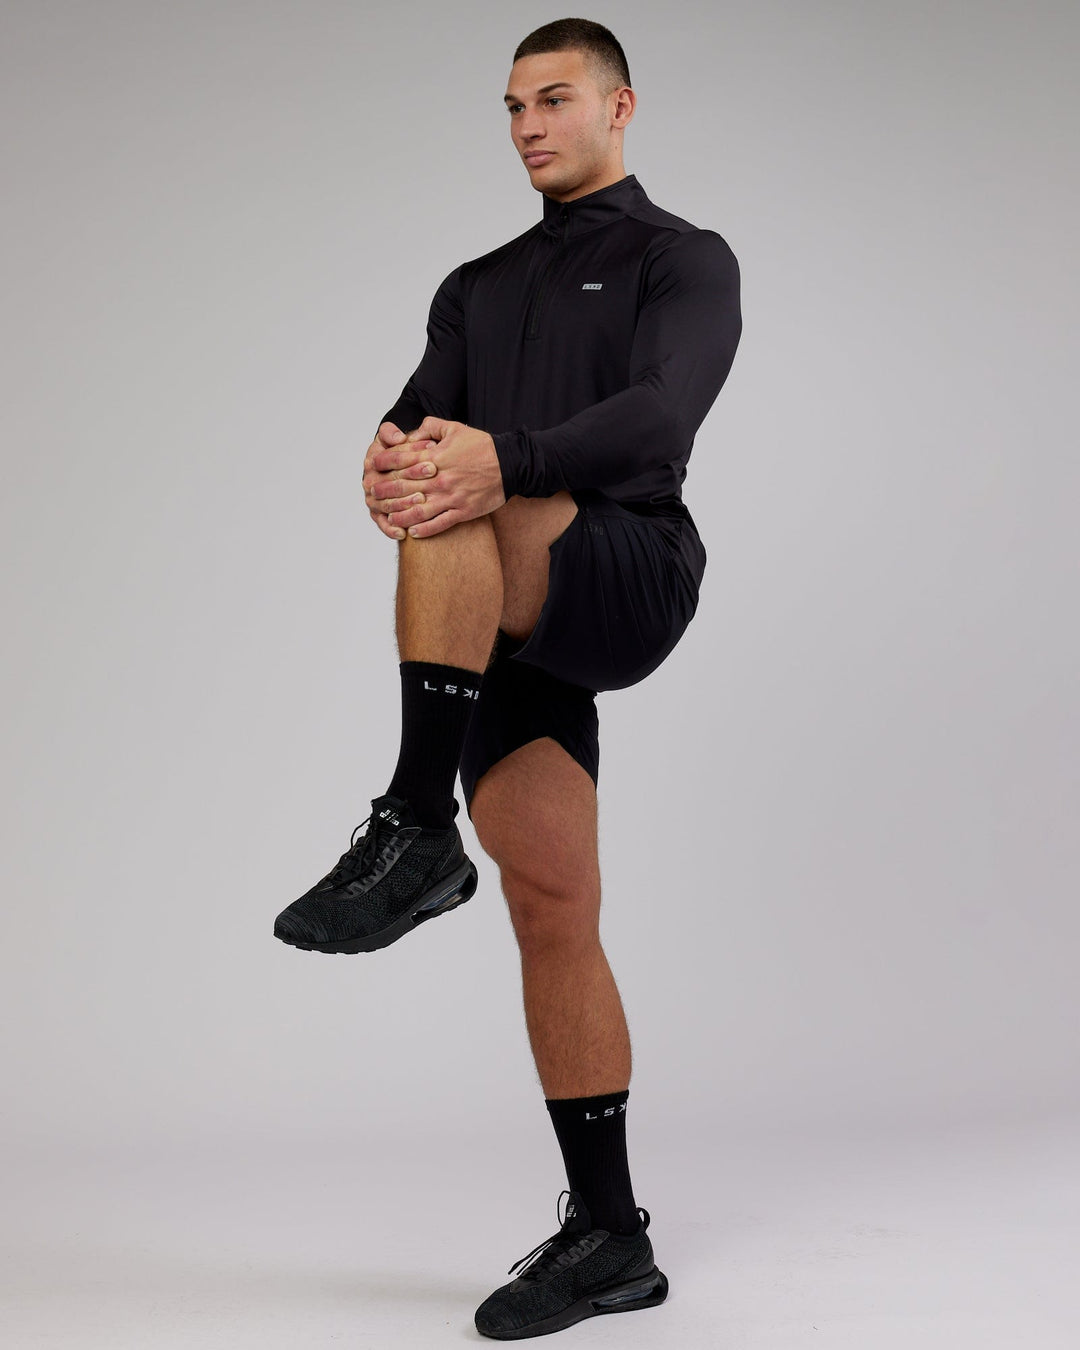 Man wearing Streamlined 1/4 Zip Active Long Sleeve - Black